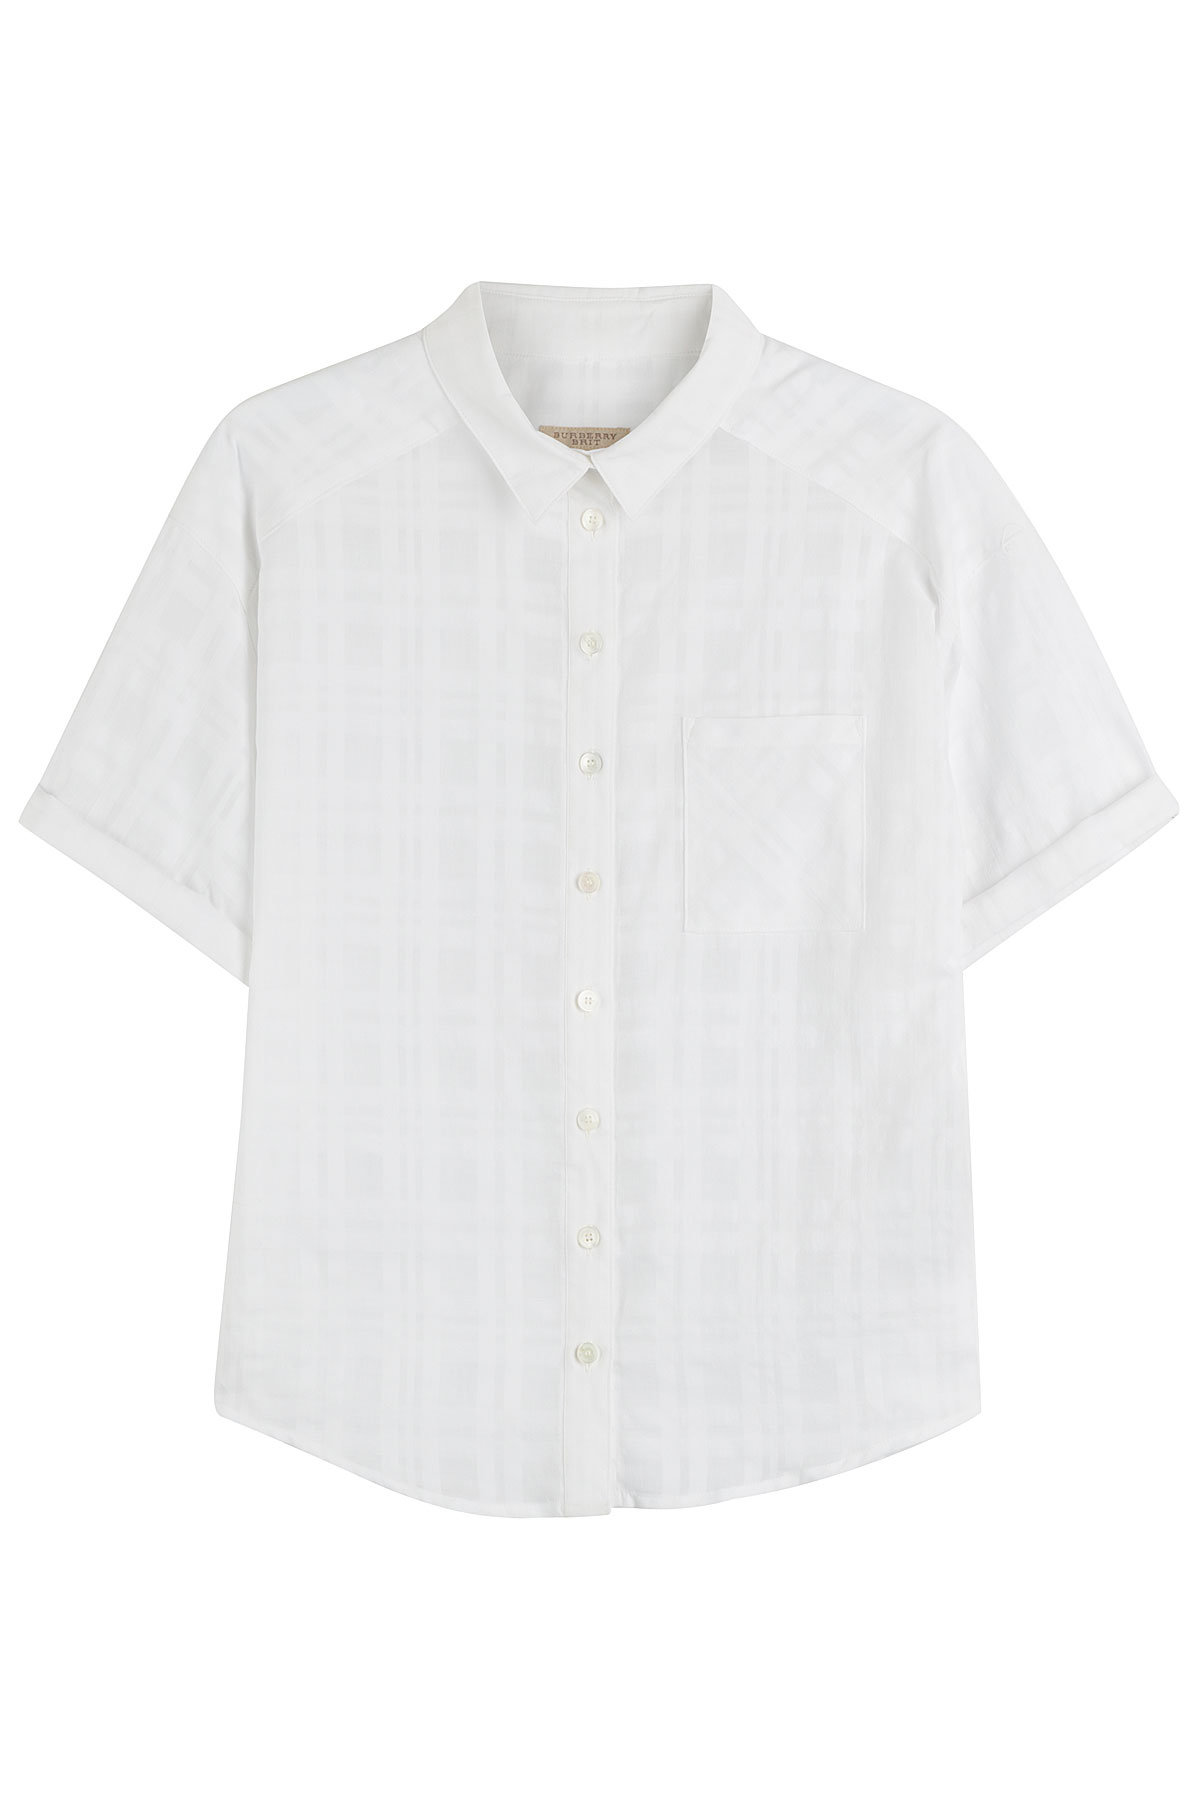 Burberry - Sheer Check Cotton Shirt